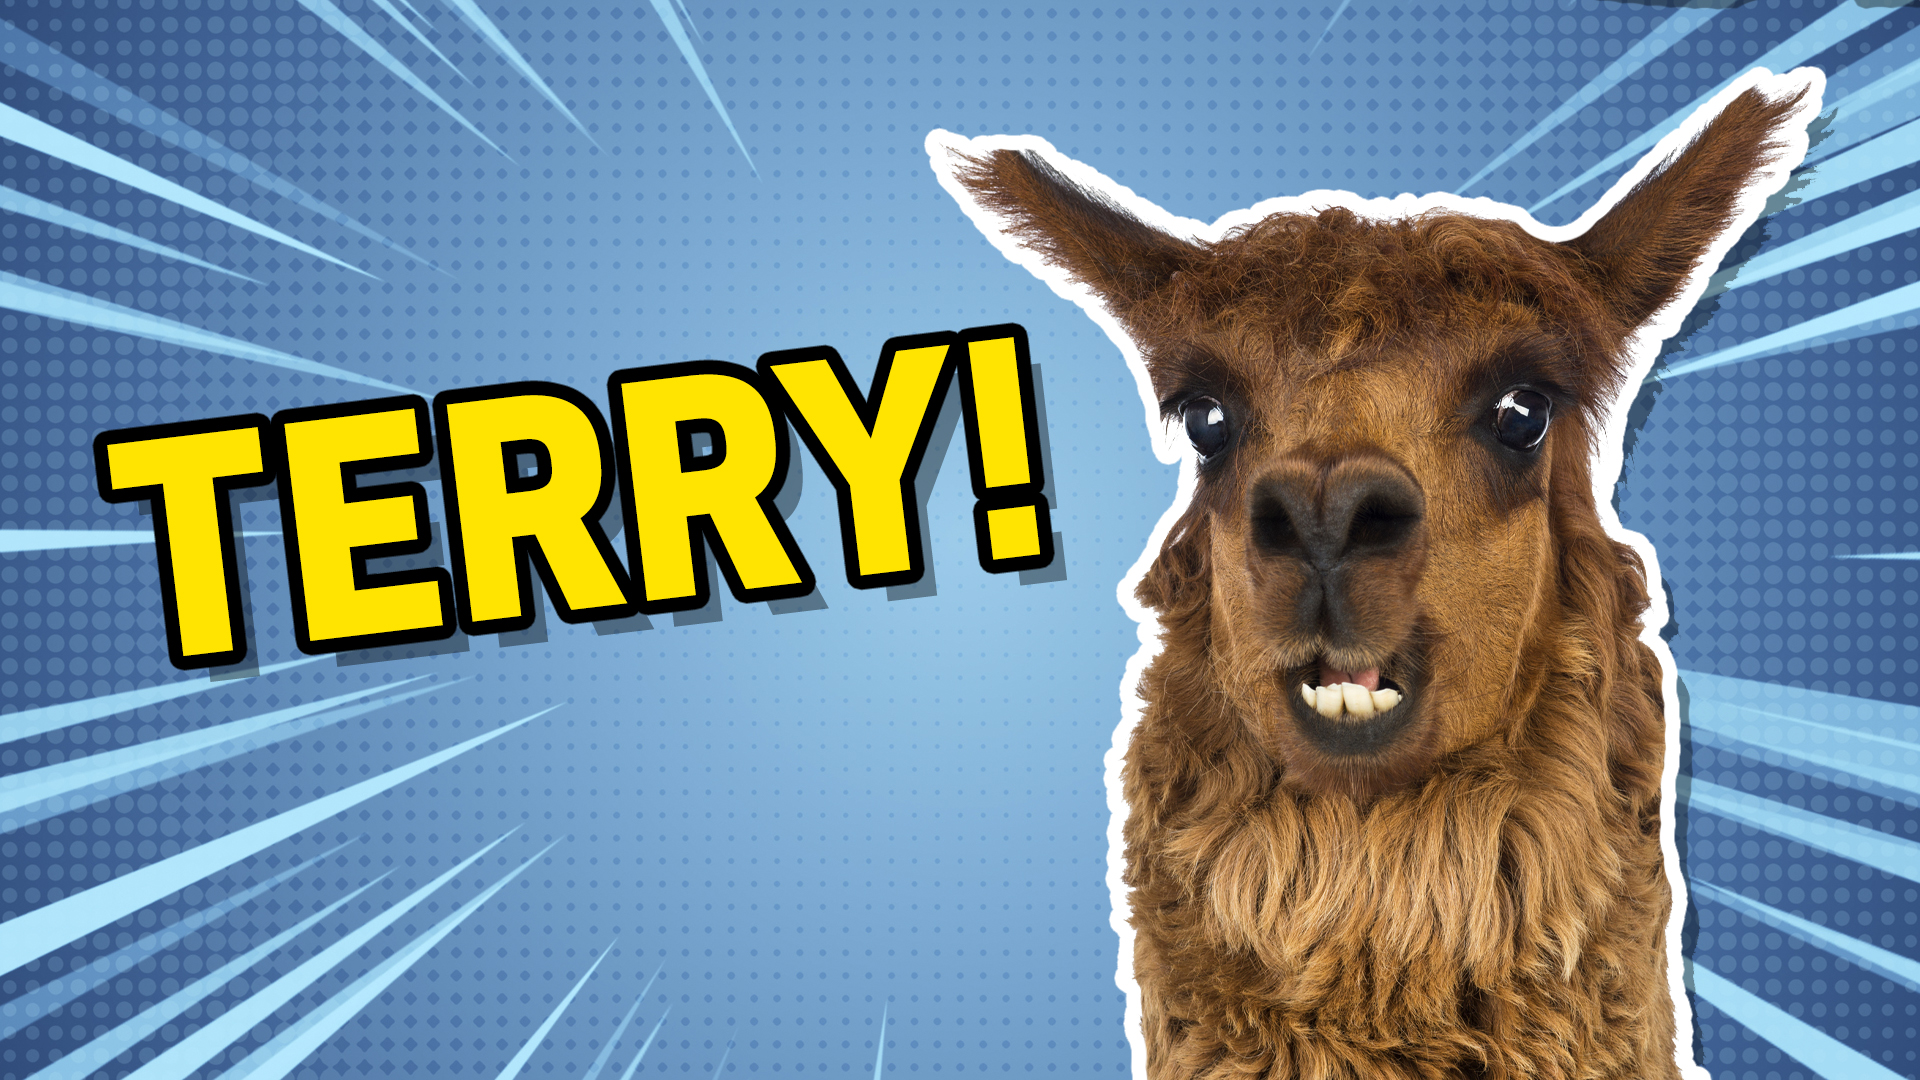 Terry the llama